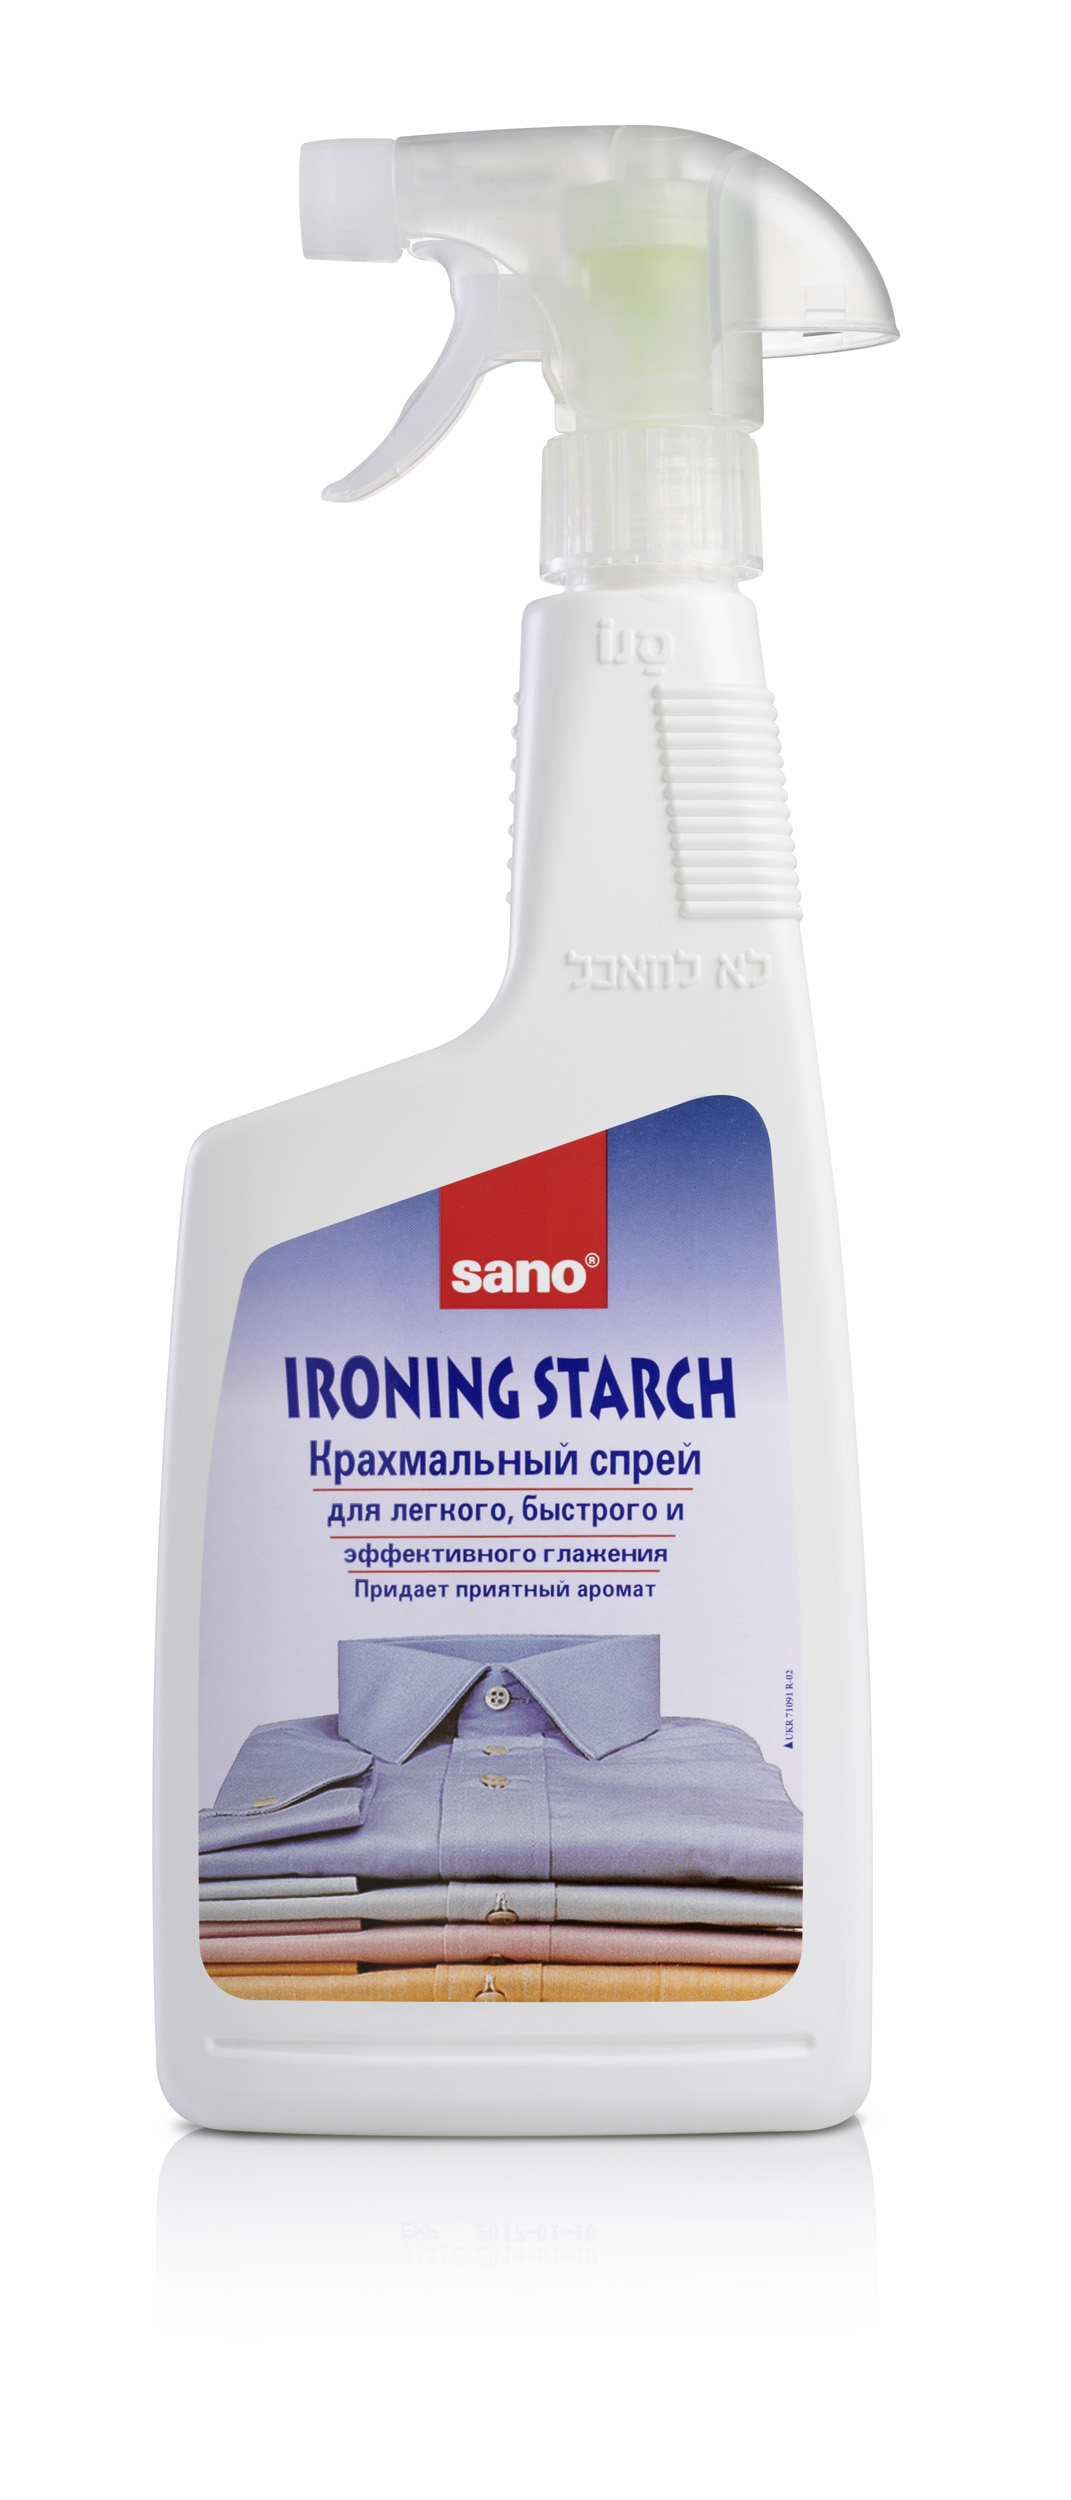 Sano Ironing Starch средство для глажения и подкрахмаливания. 700 мл.#7290005426278